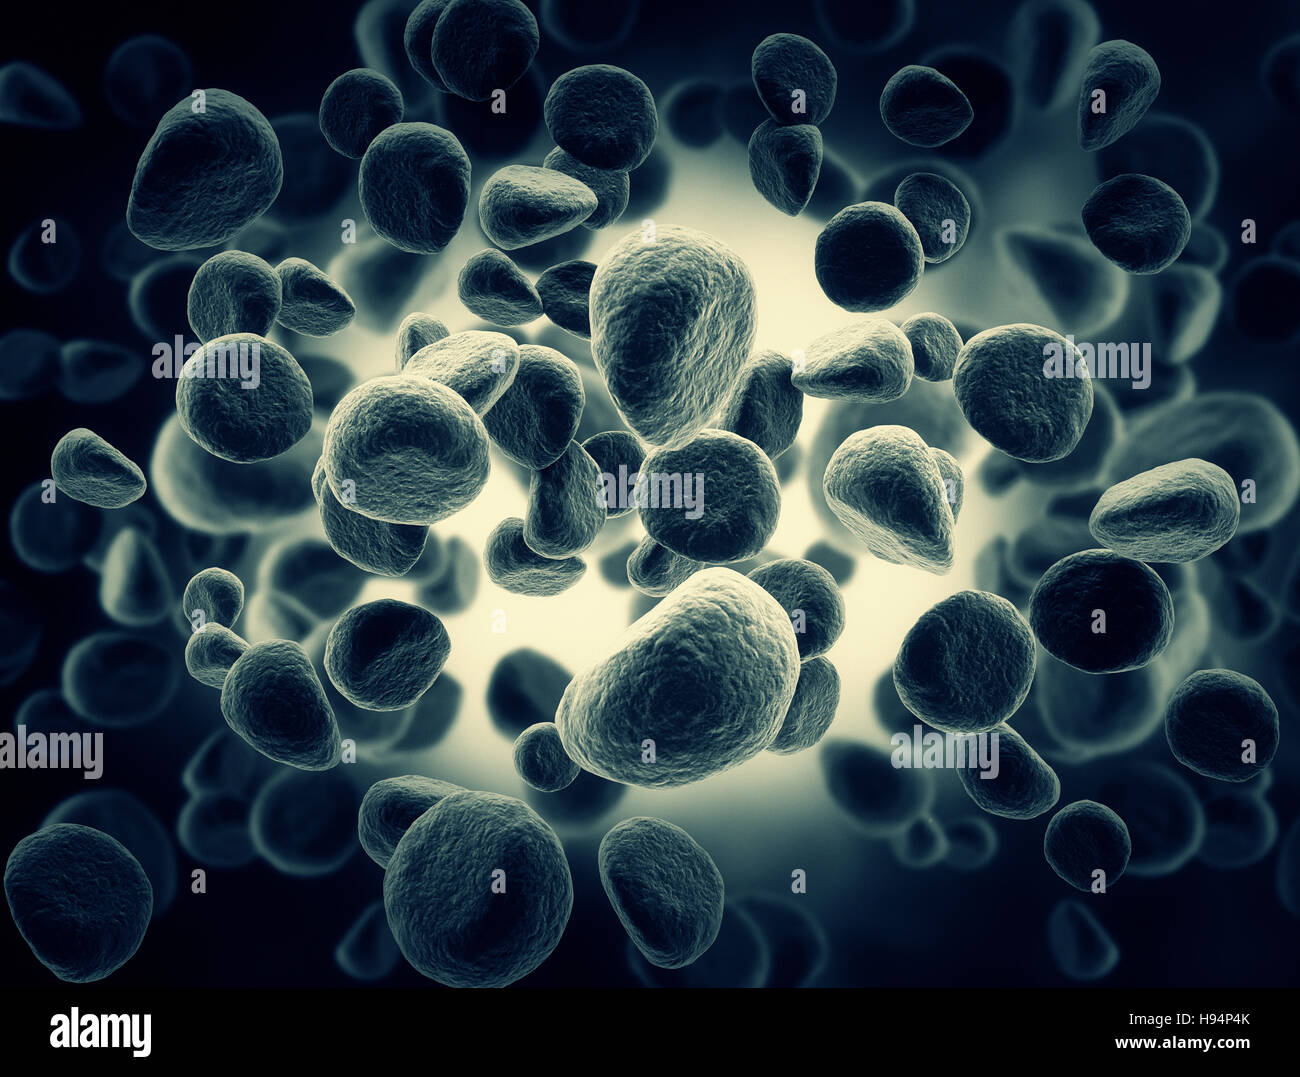 High resolution Illustration of cells Stock Photo